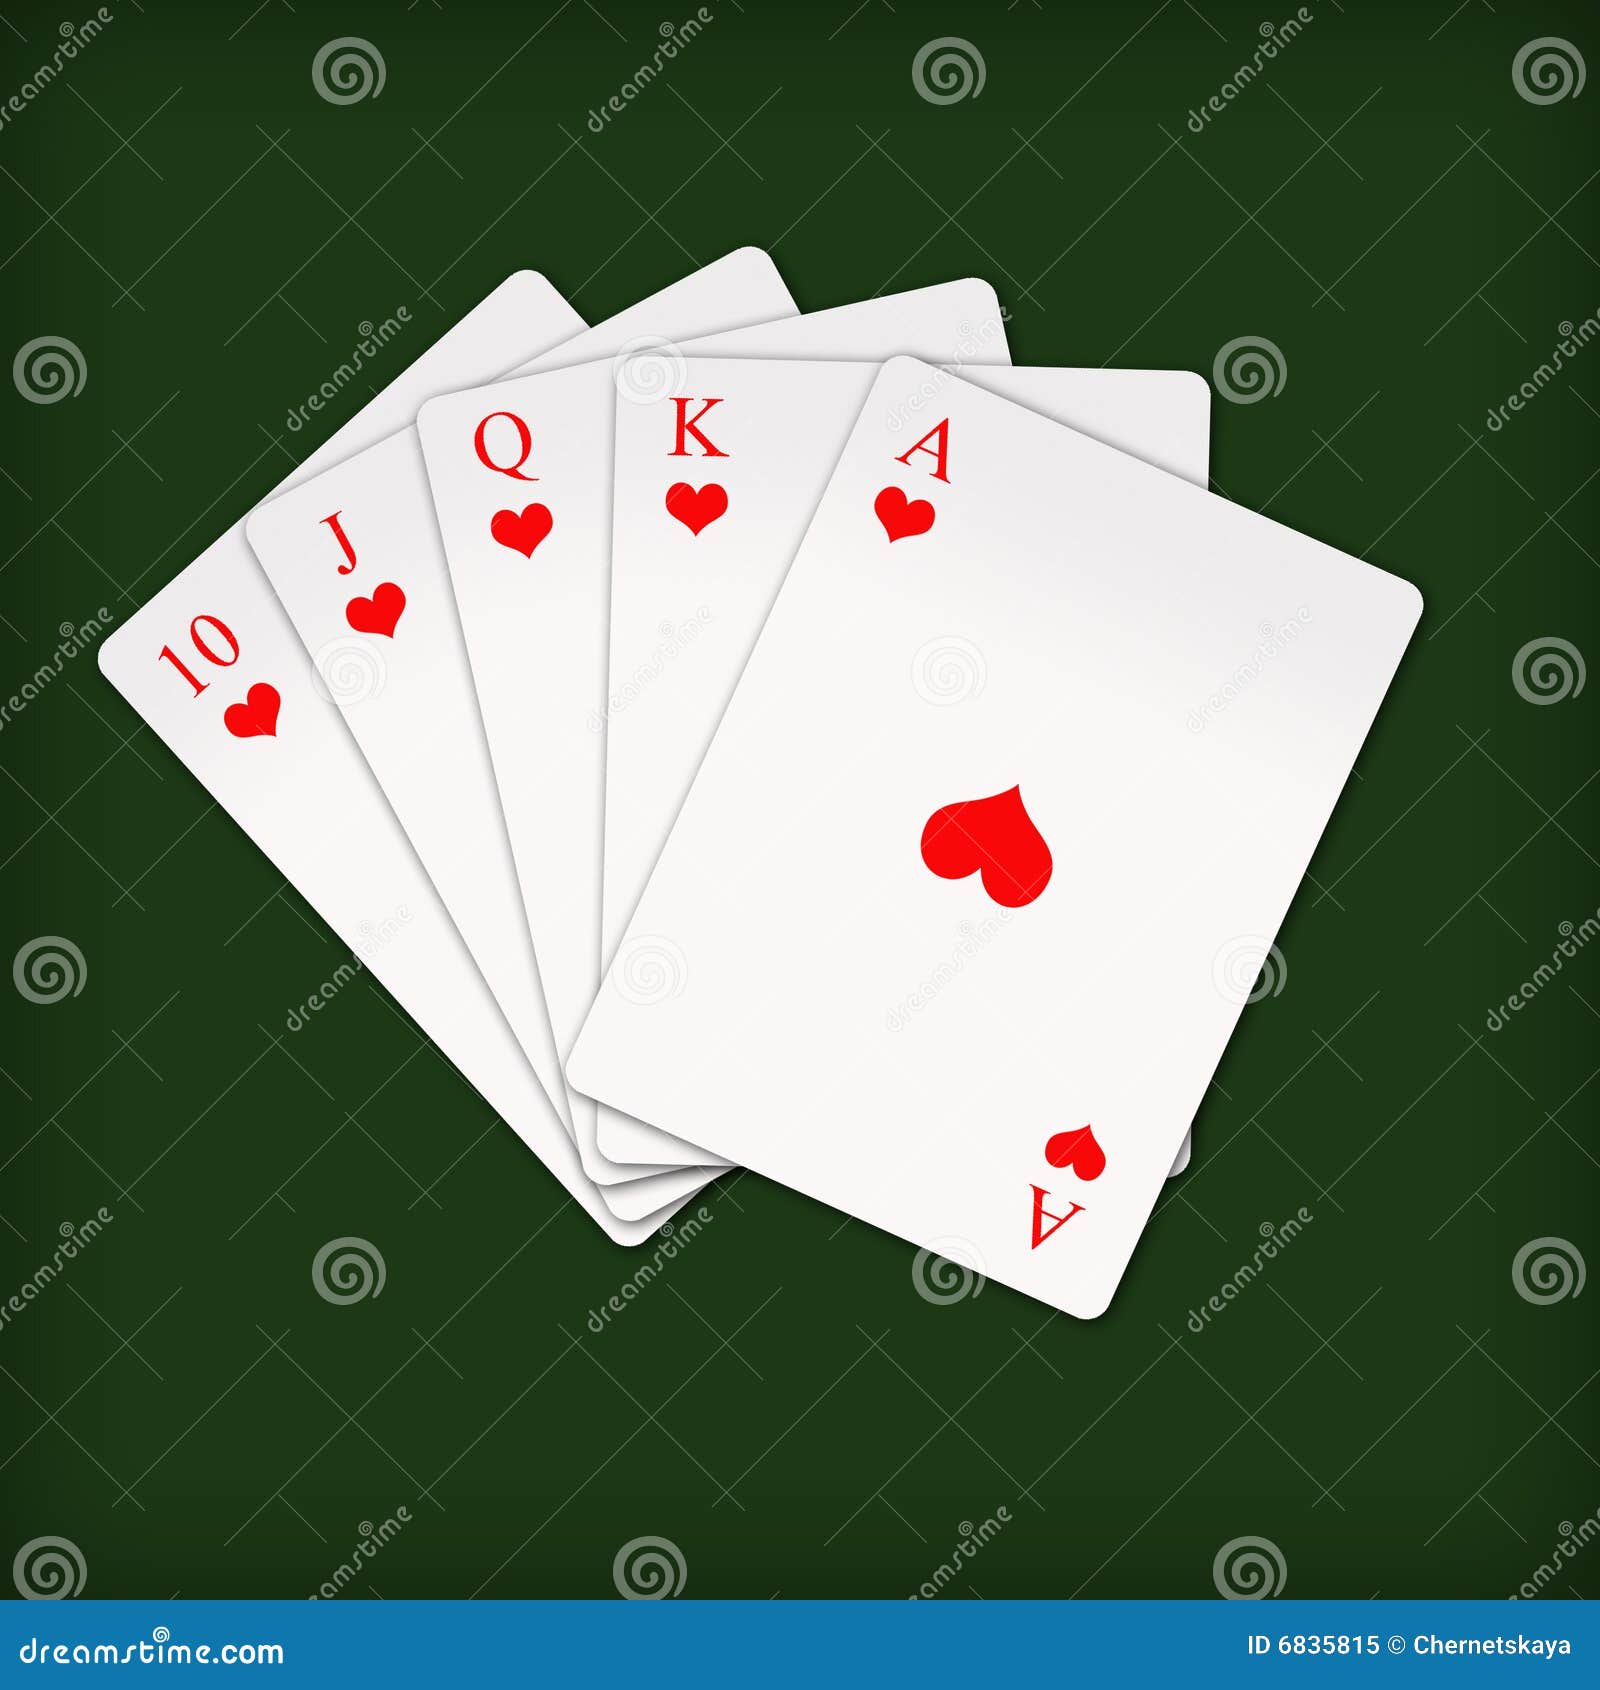 Card Games At A Casino